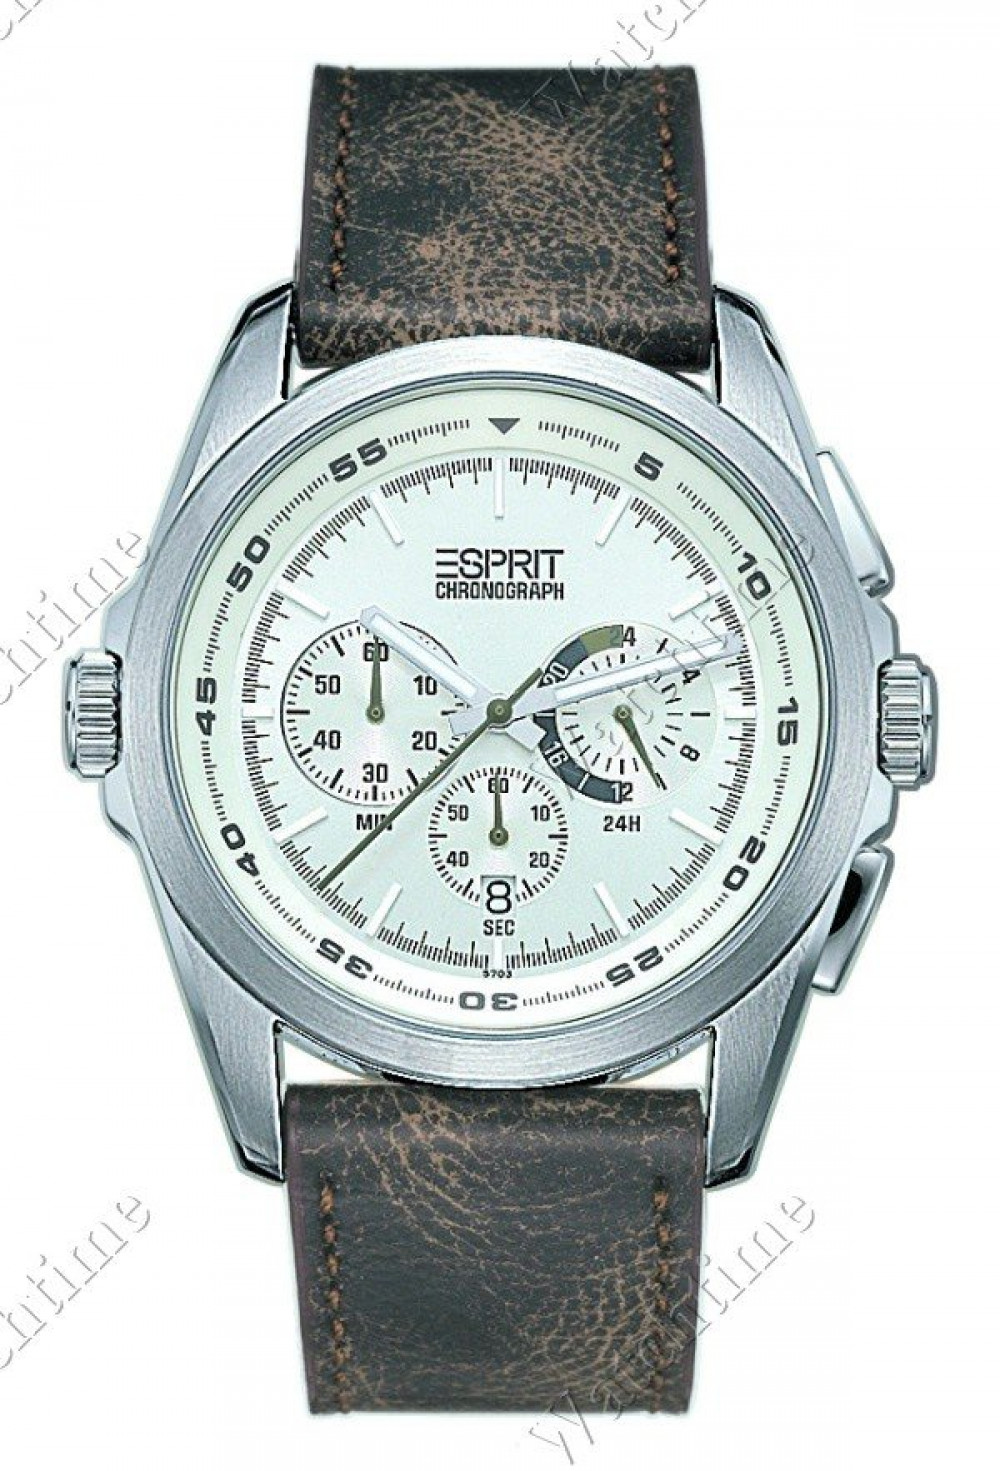 Zegarek firmy Esprit timewear, model classic silver chrono